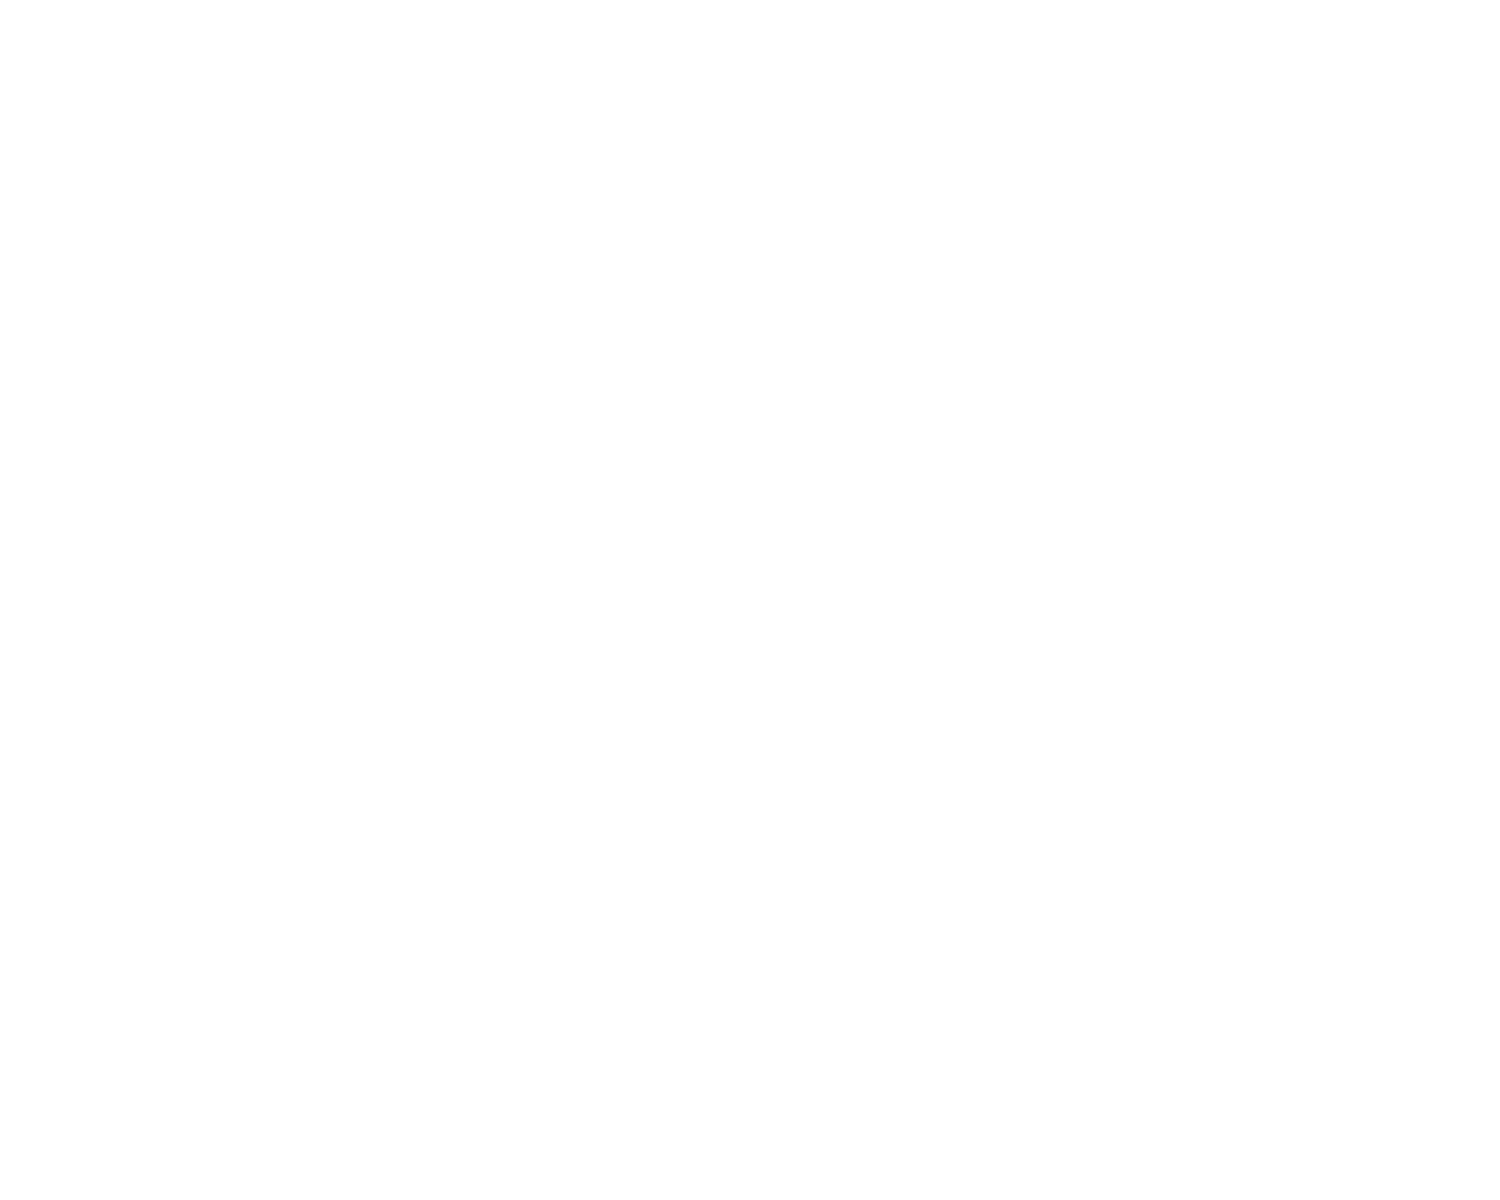 Jane Anthony